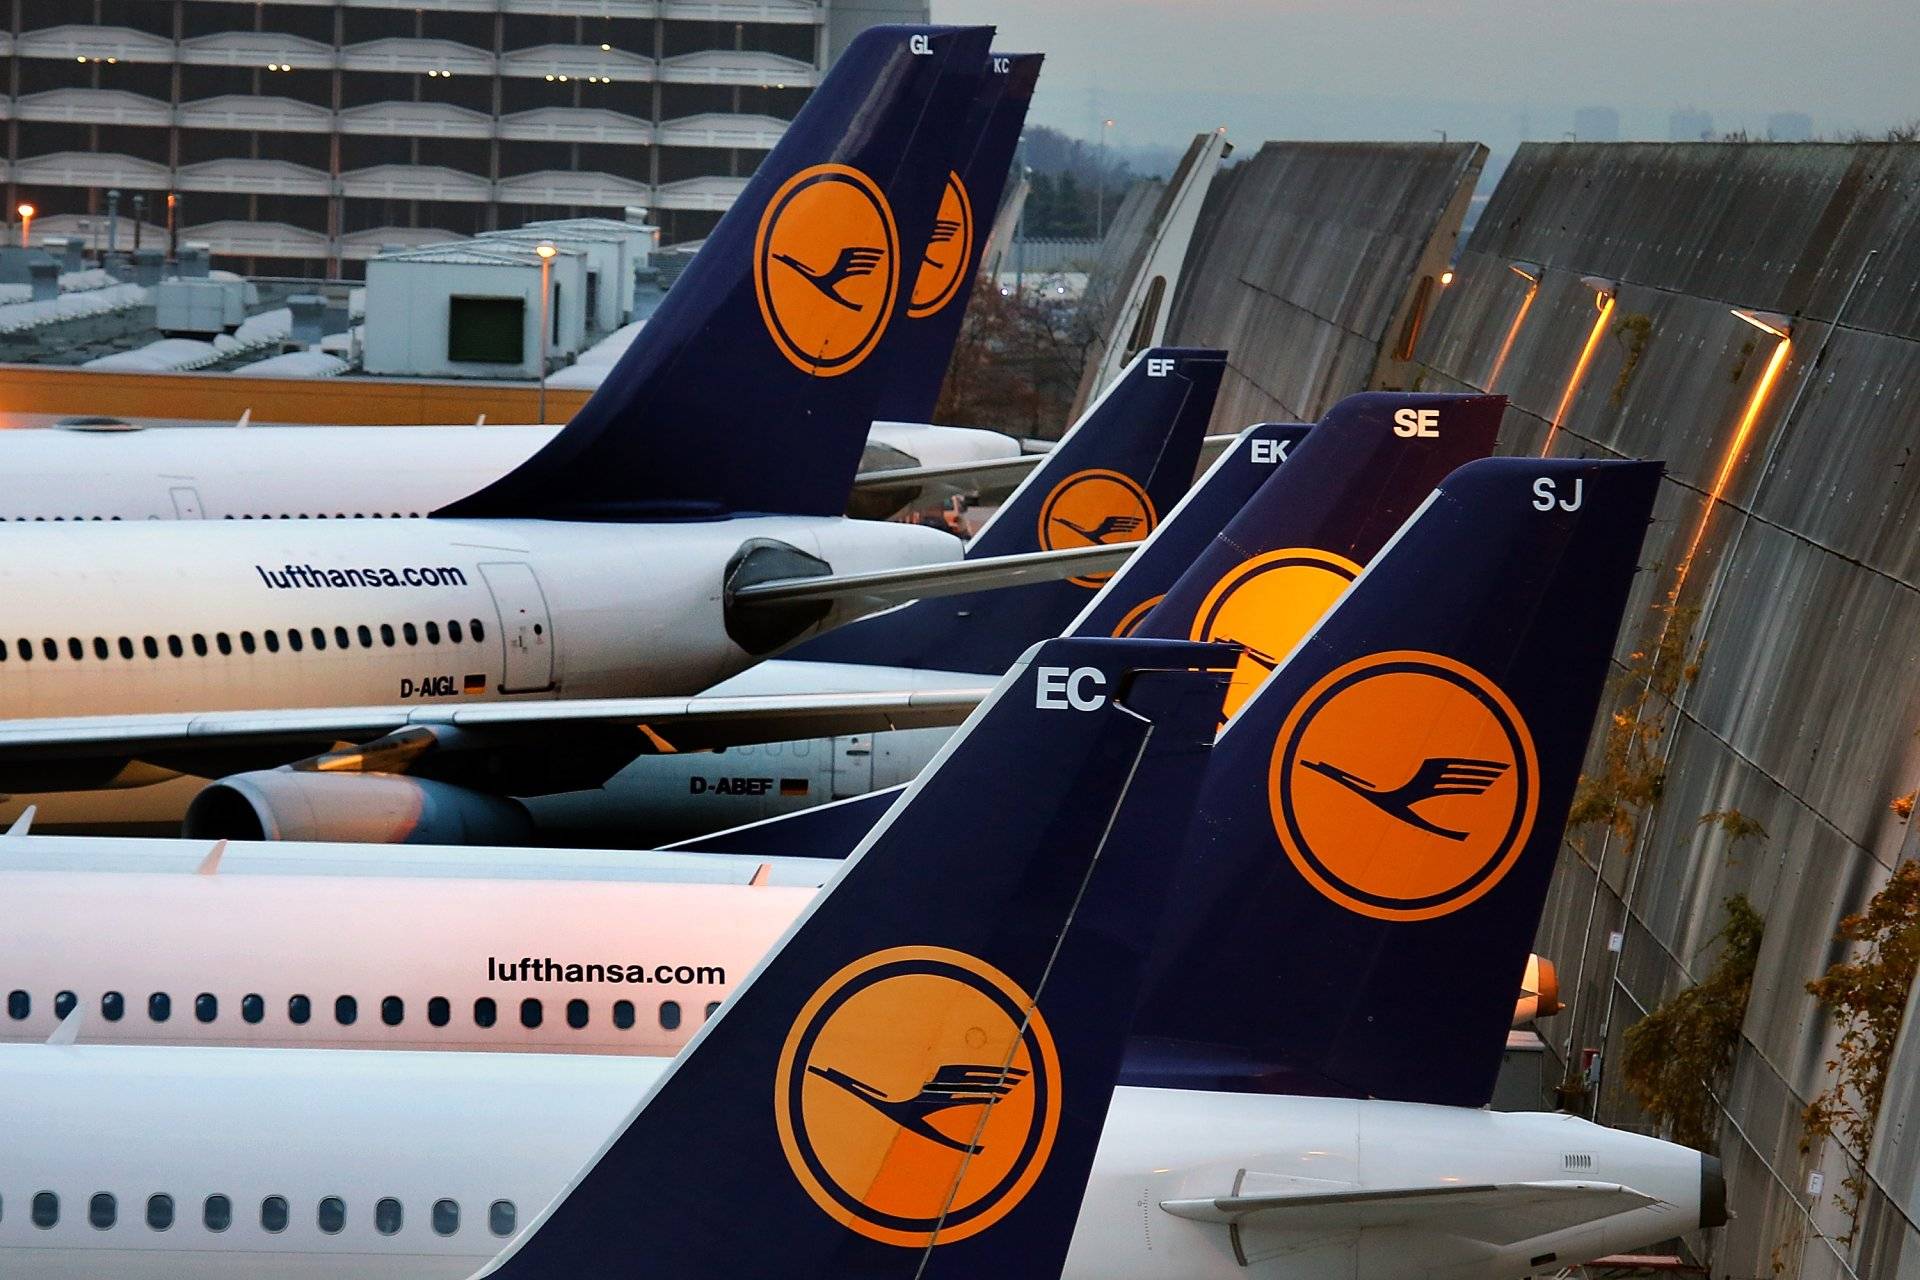 Lufthansa - флагманский авиаперевозчик германии, крупнейший авиаконцерн европы